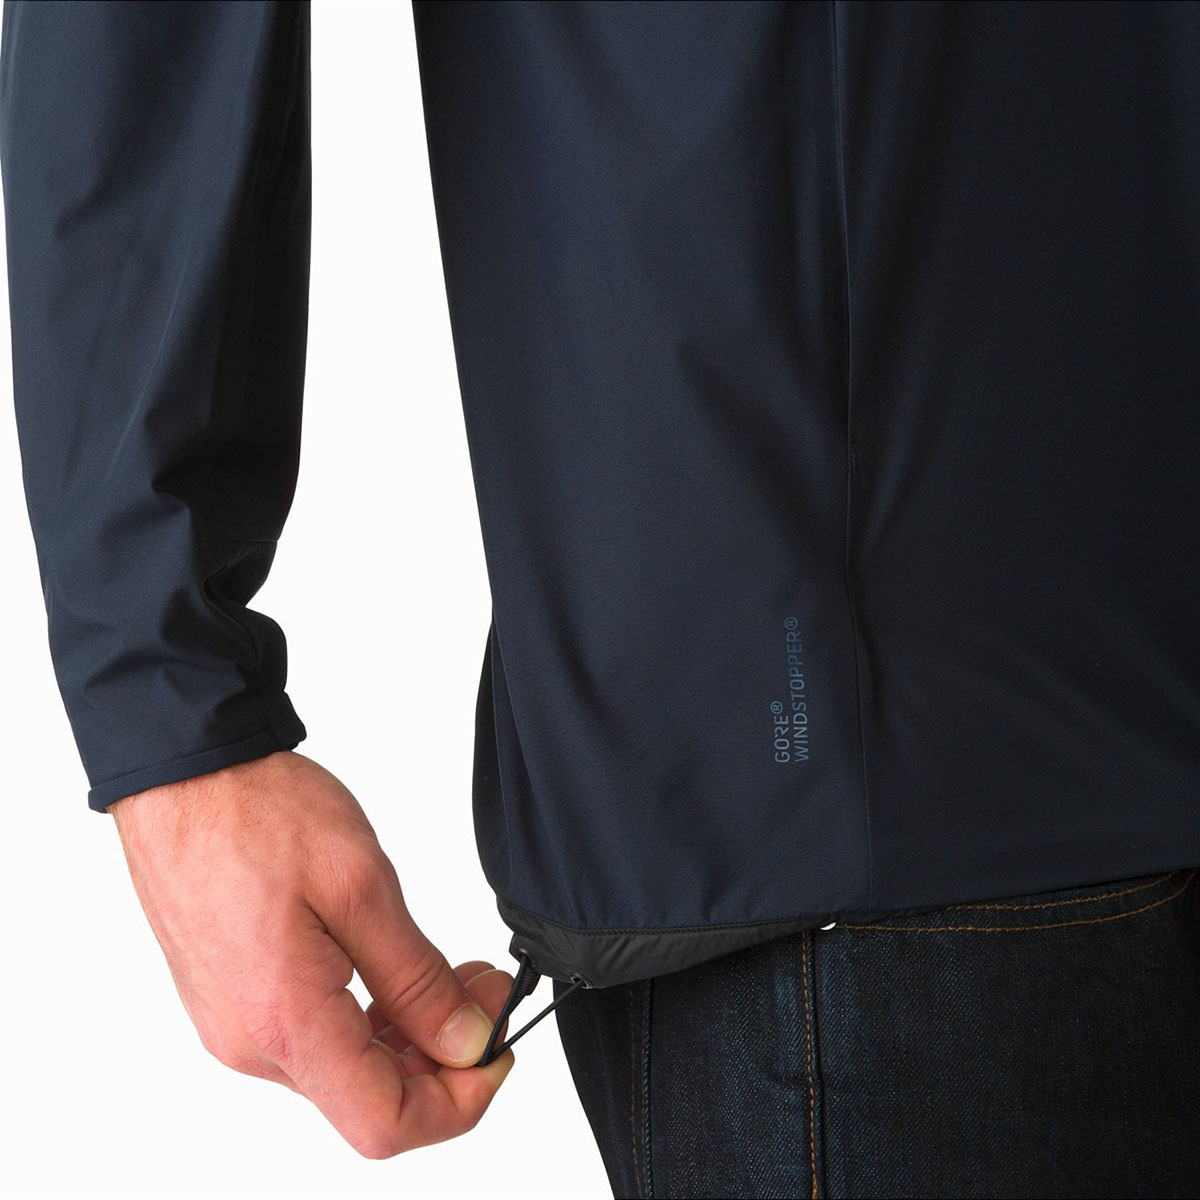 Arc'teryx Solano Jacket, men's, discontinued Fall 2019 colors (free ...